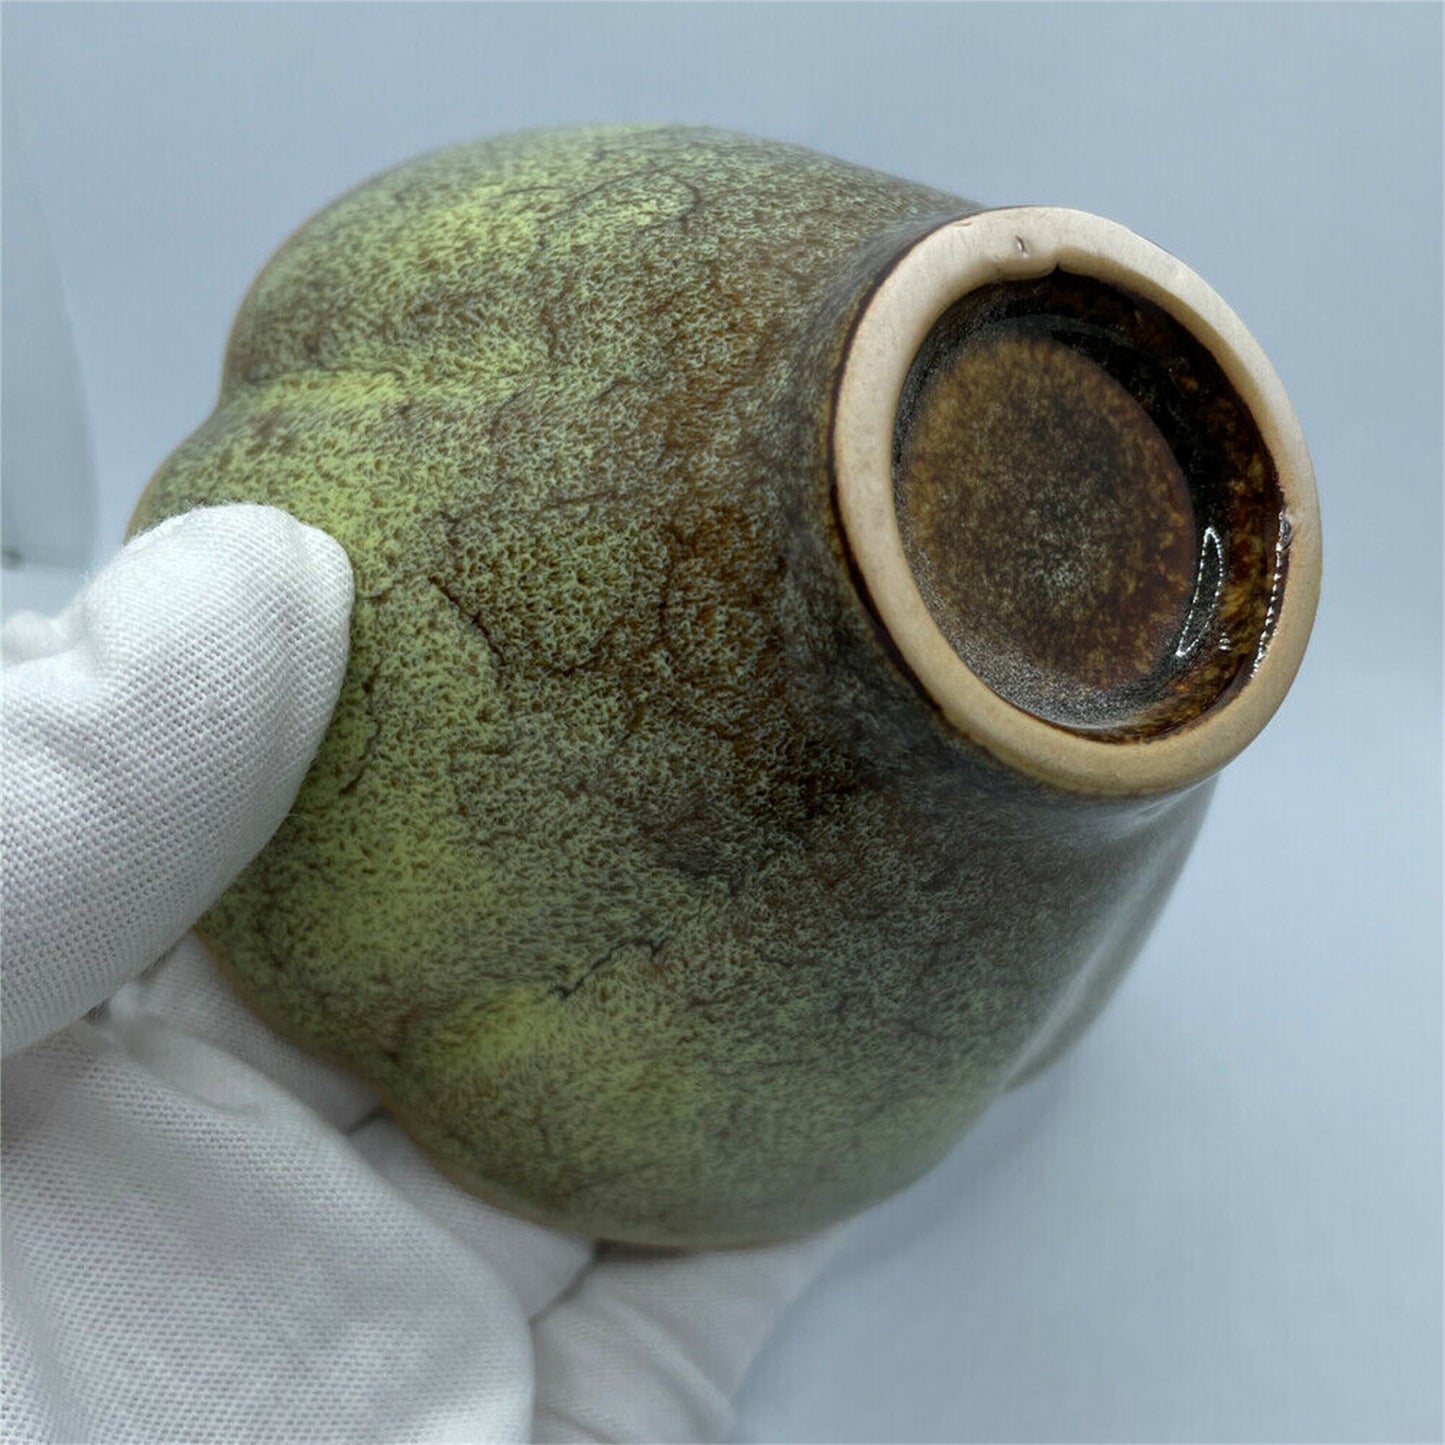 021 Chinese JianZhan handmade Tenmoku Tea Cup Ceramic Teacup Mug Crafts Collection|Father's Day Gift